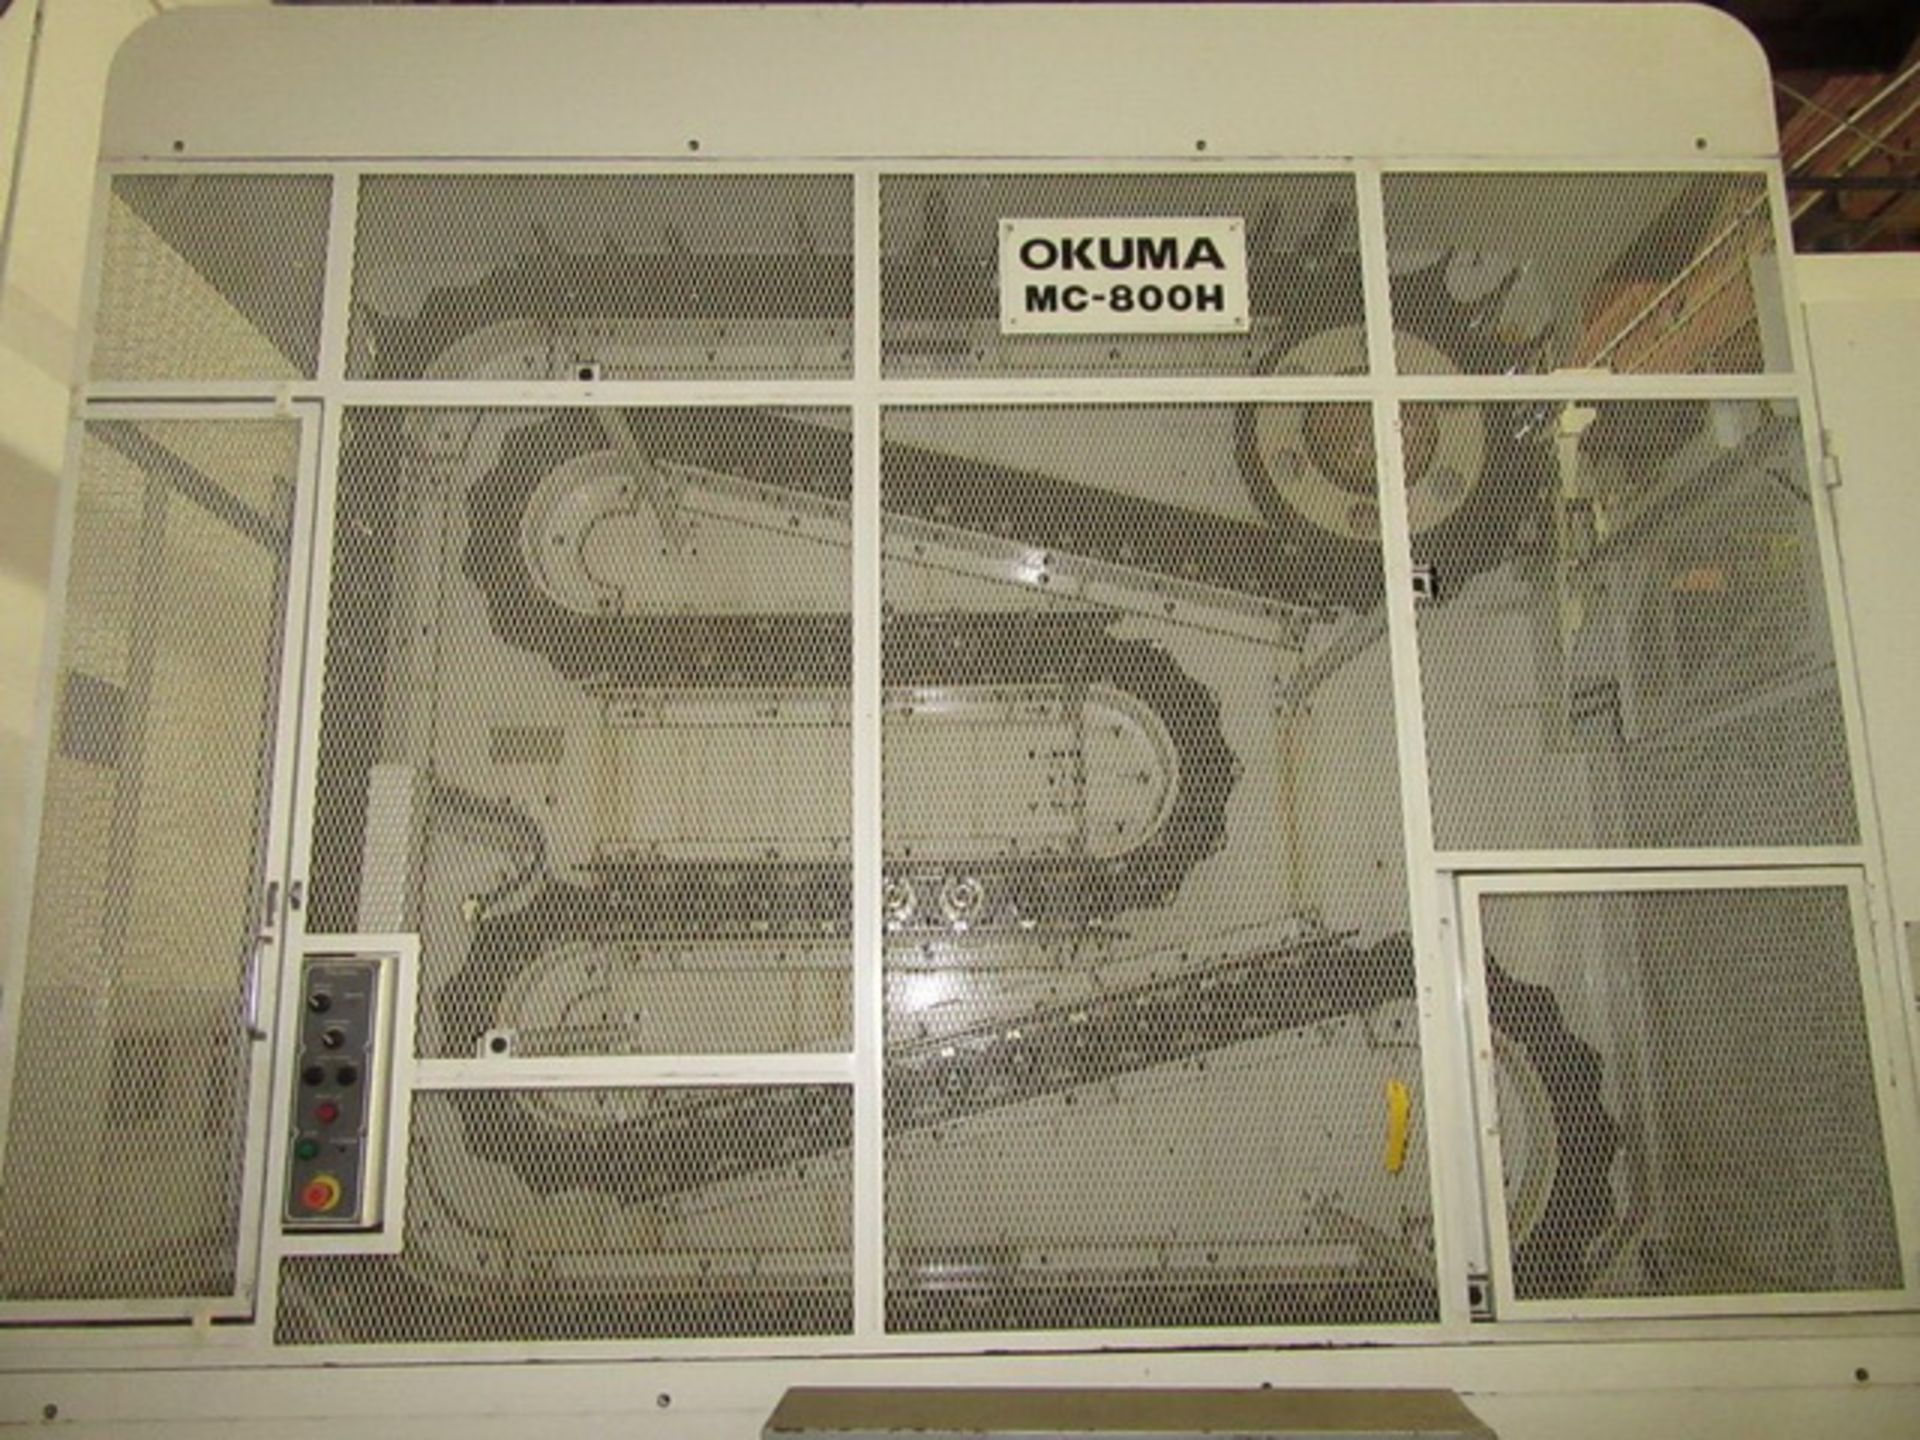 OKUMA MC-800H CNC MACHINING CENTER, HORIZONTAL, YEAR-1999 S/N-73, 4-AXIS, SINGLE SPINDLE, 30-HP, 4, - Image 9 of 25